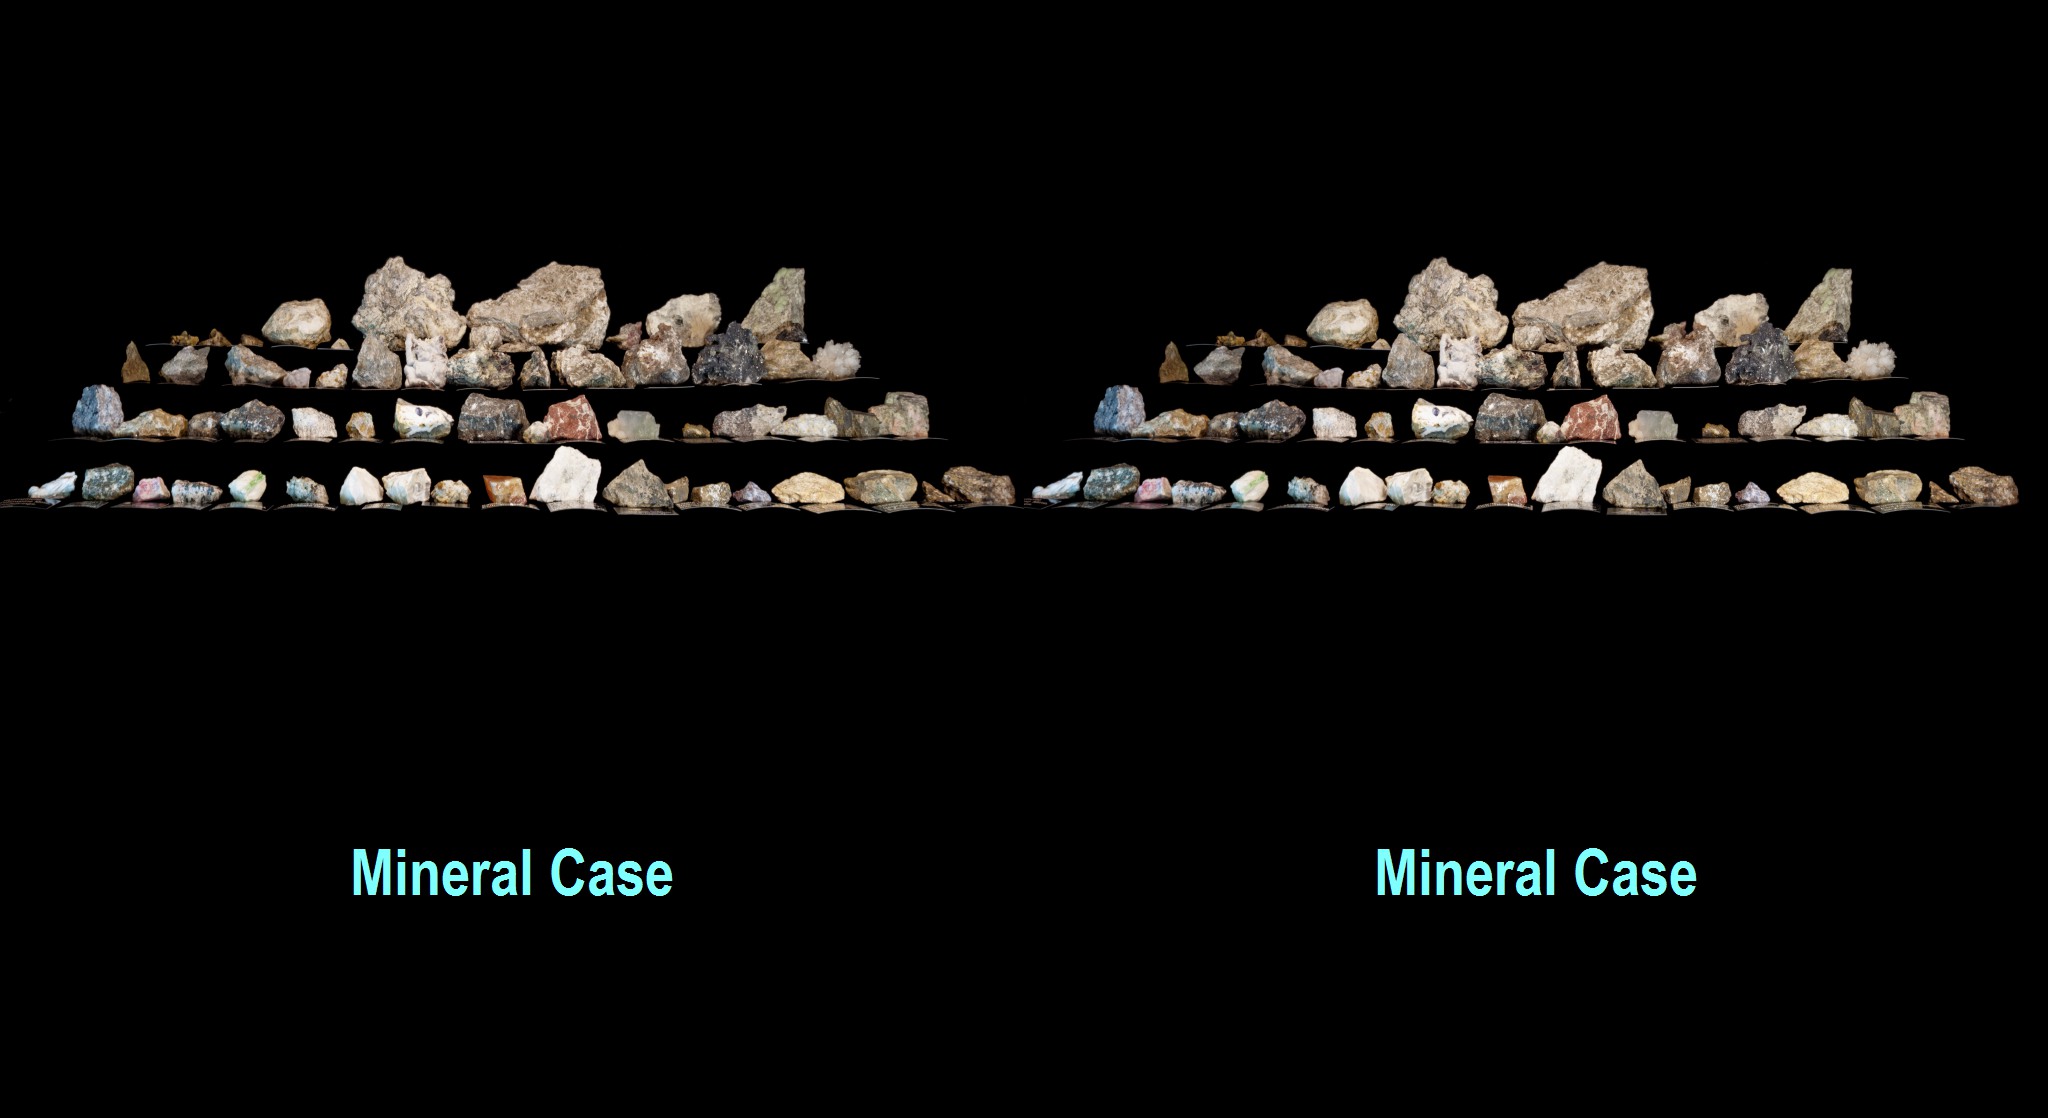 Mineral case under white light